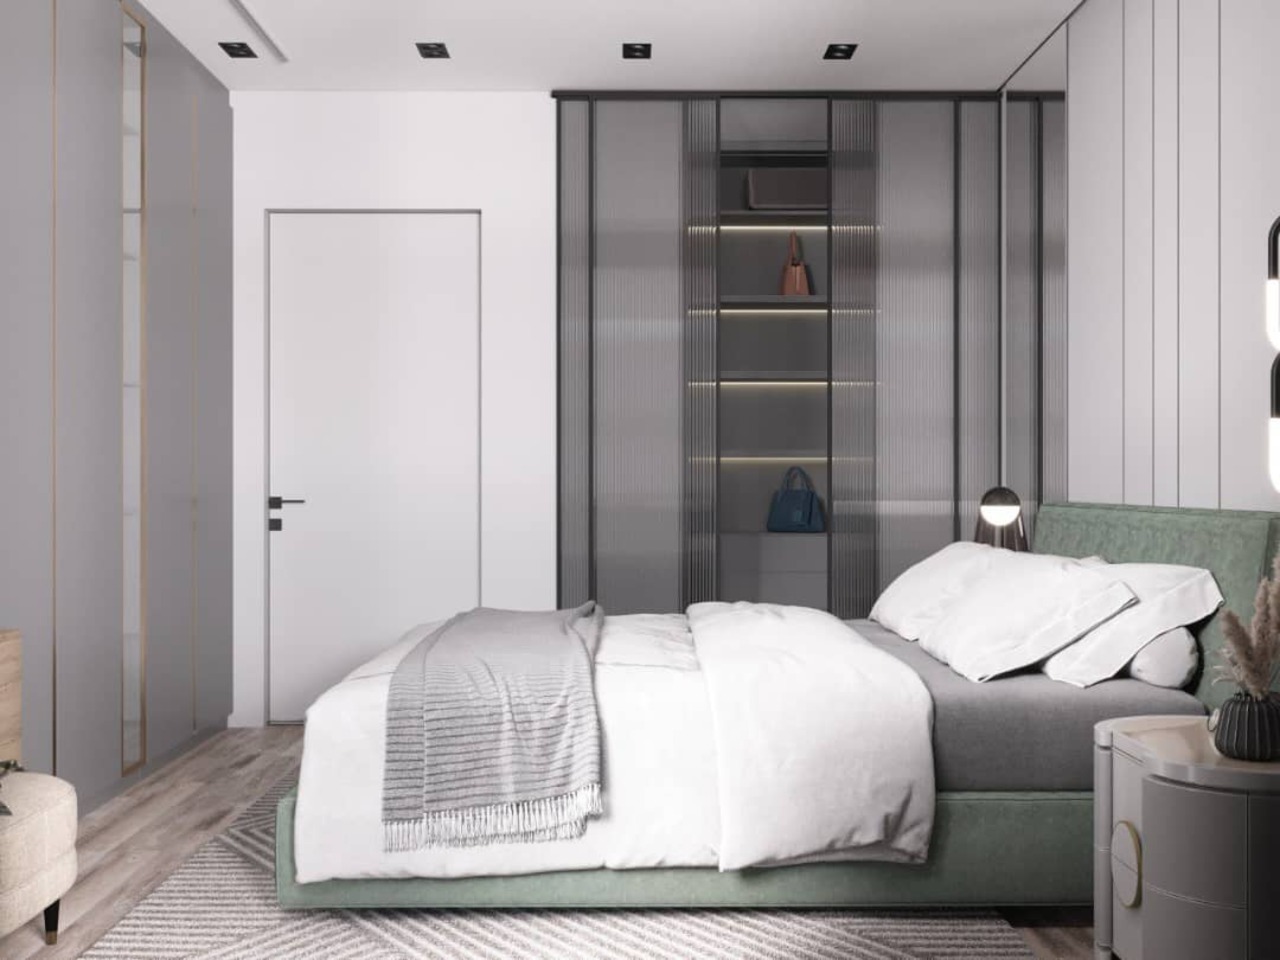 Дизайн спальни в ЖК "Ария". Проектор вместо телевизора